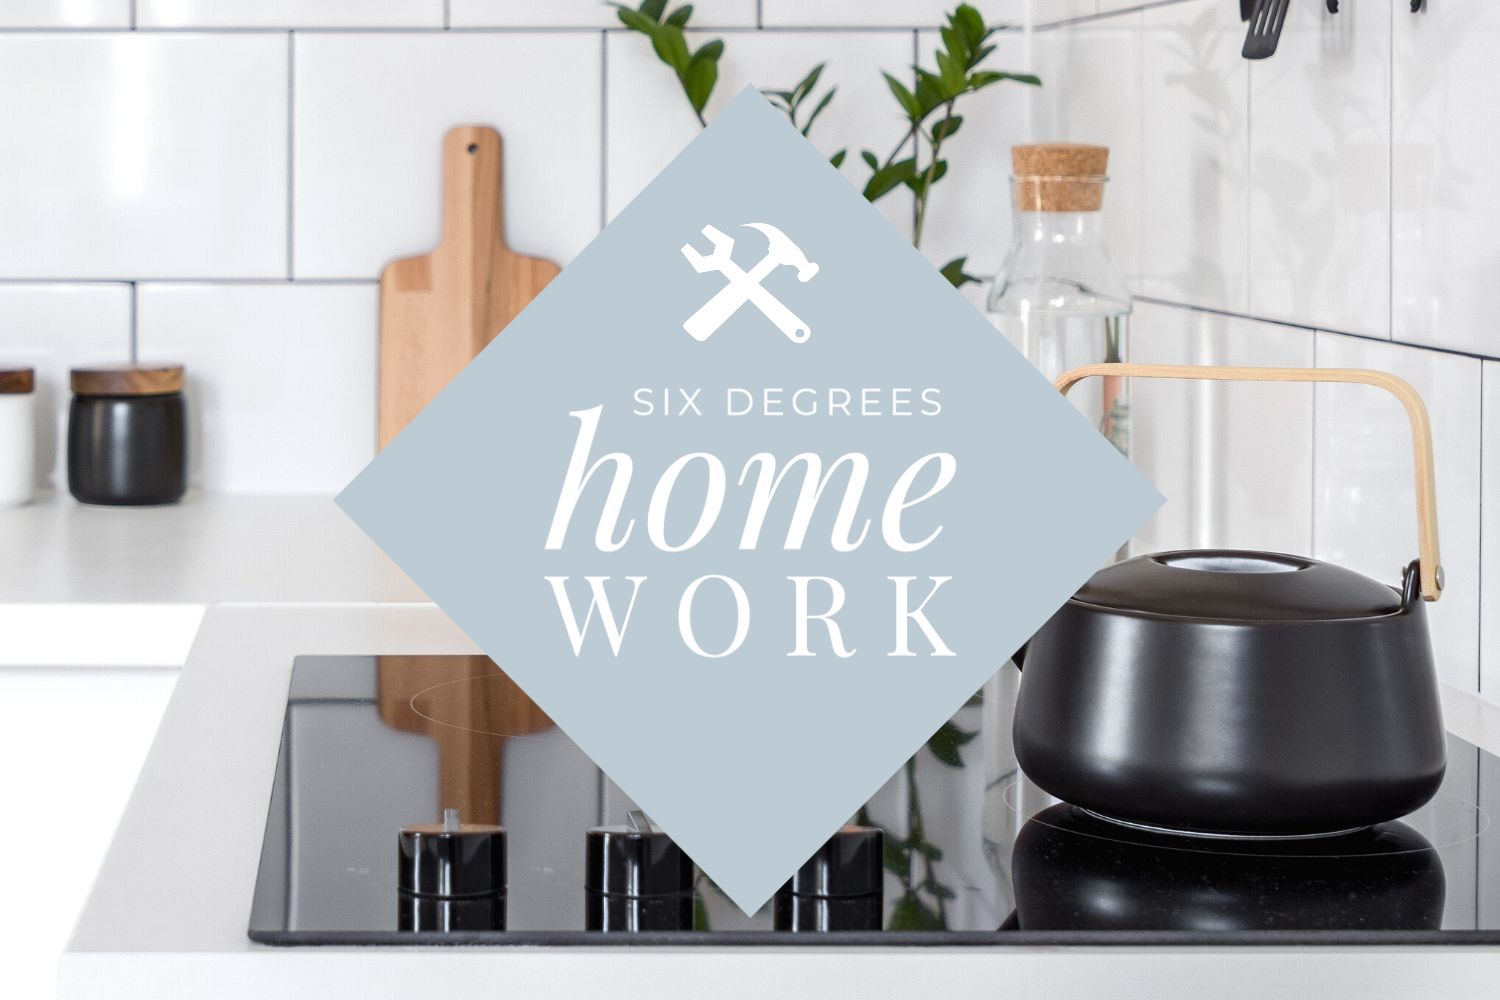 Homework blog graphic over kitchen photo